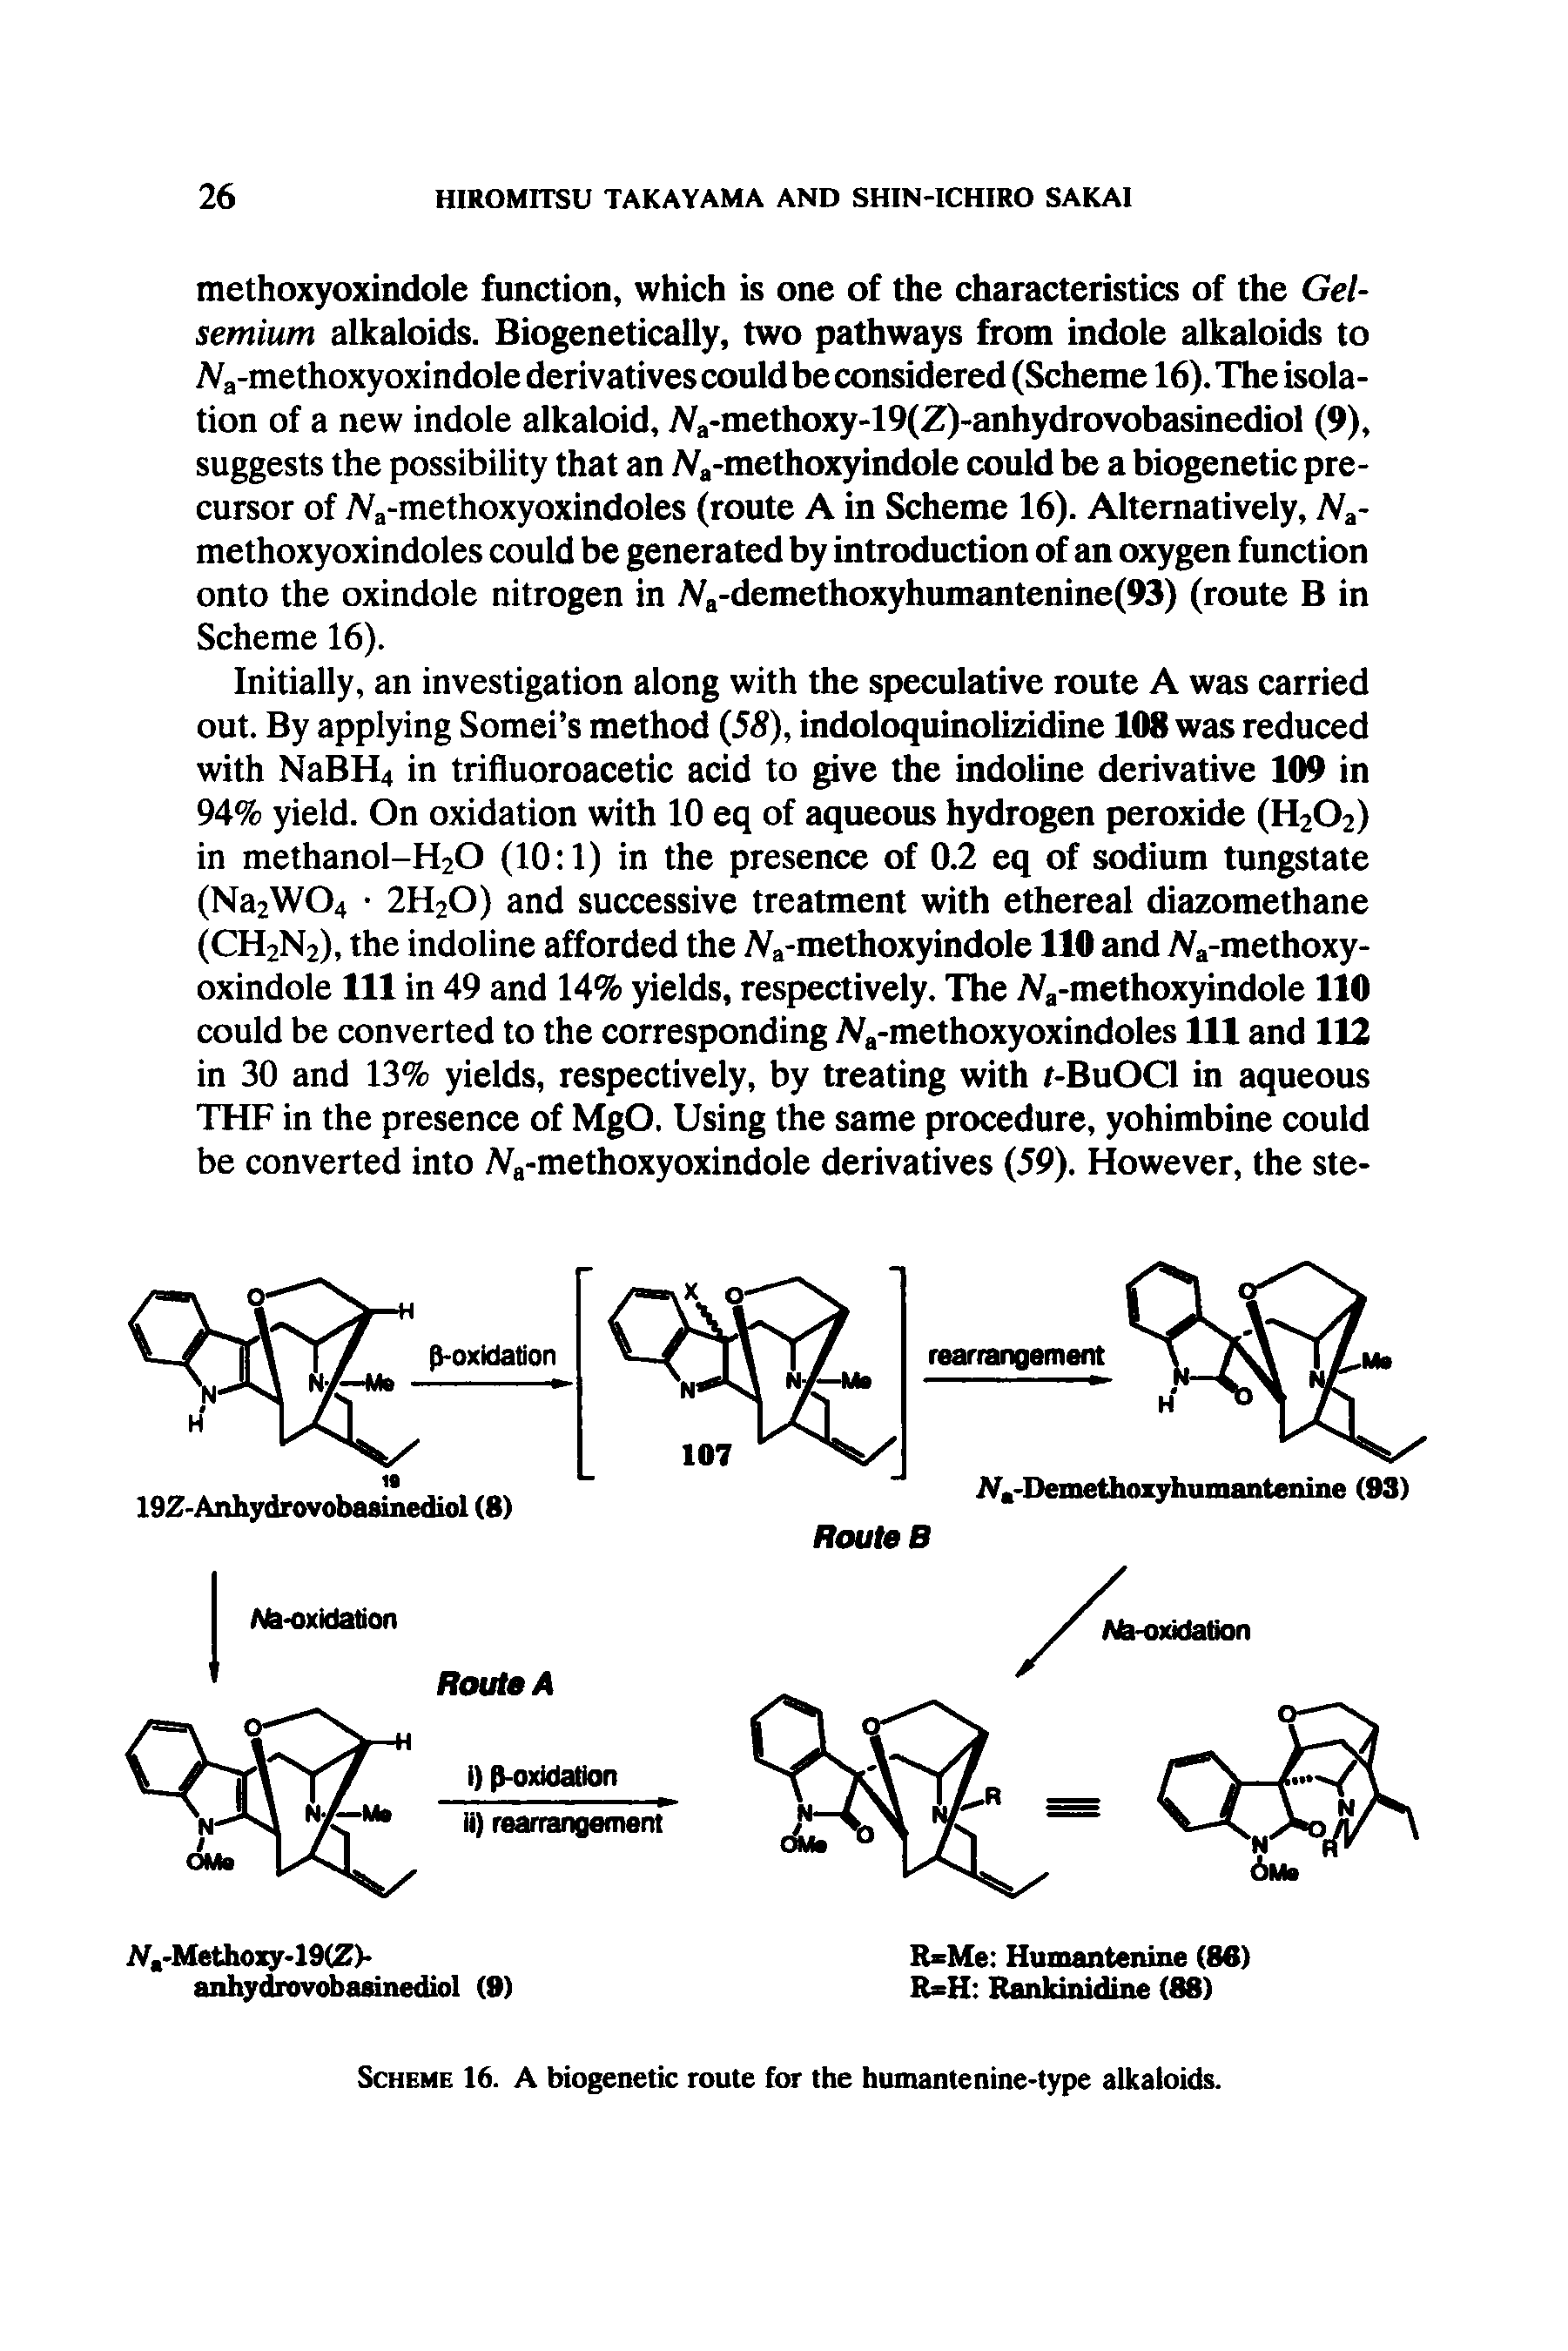 Scheme 16. A biogenetic route for the humantenine-type alkaloids.